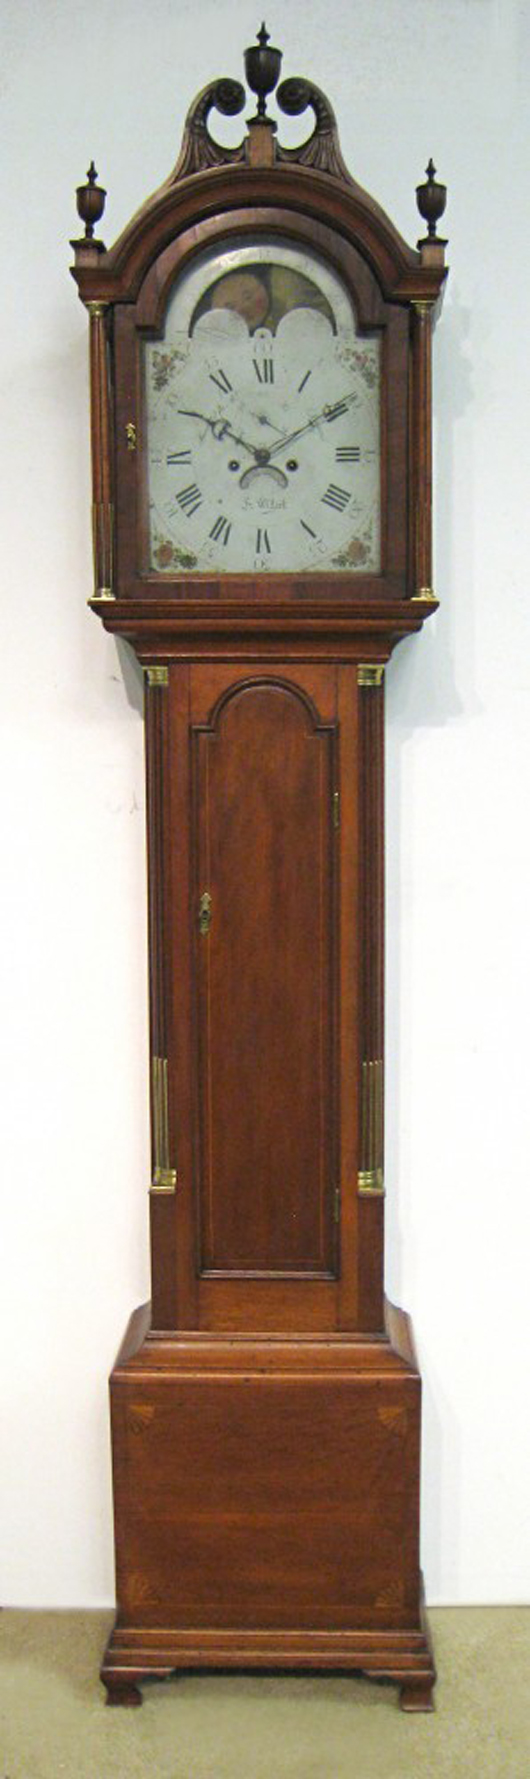 Mahogany Federal tall-case clock signed on the dial ‘E. Willard.’ Gordon S. Converse & Co. image.